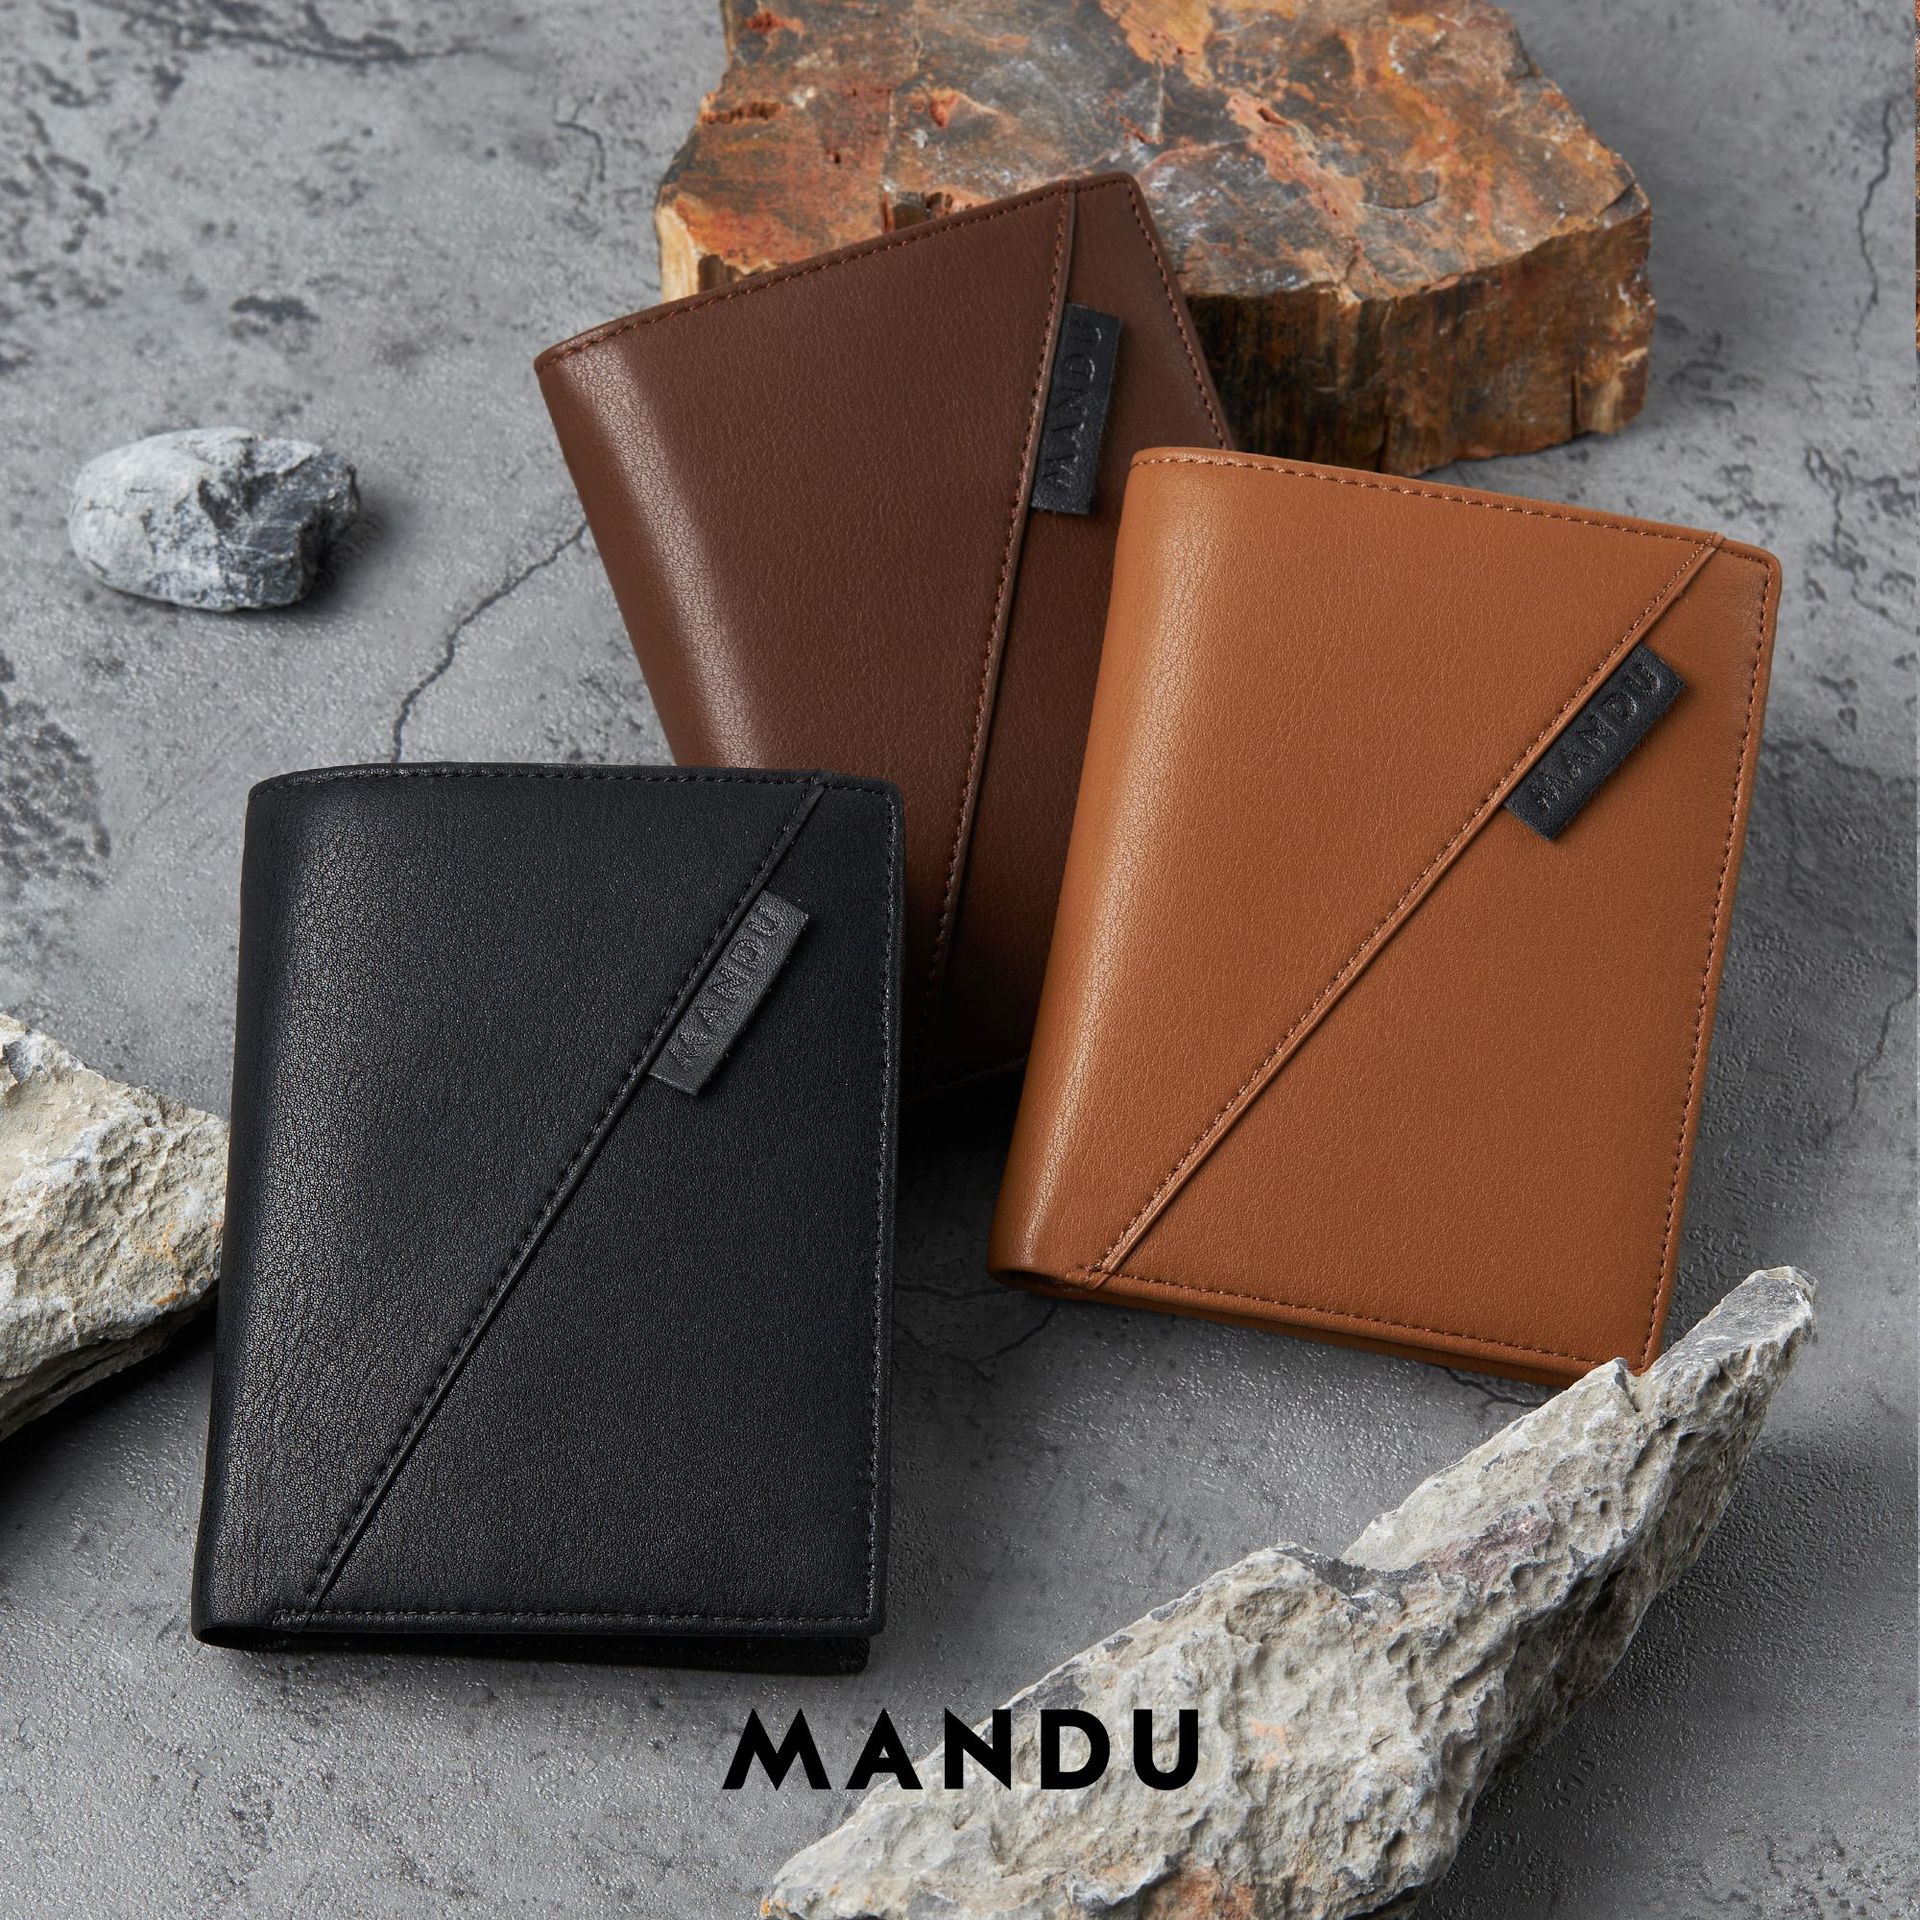 Mandu Branded Premium Quality Original Leather Vertical Wallet